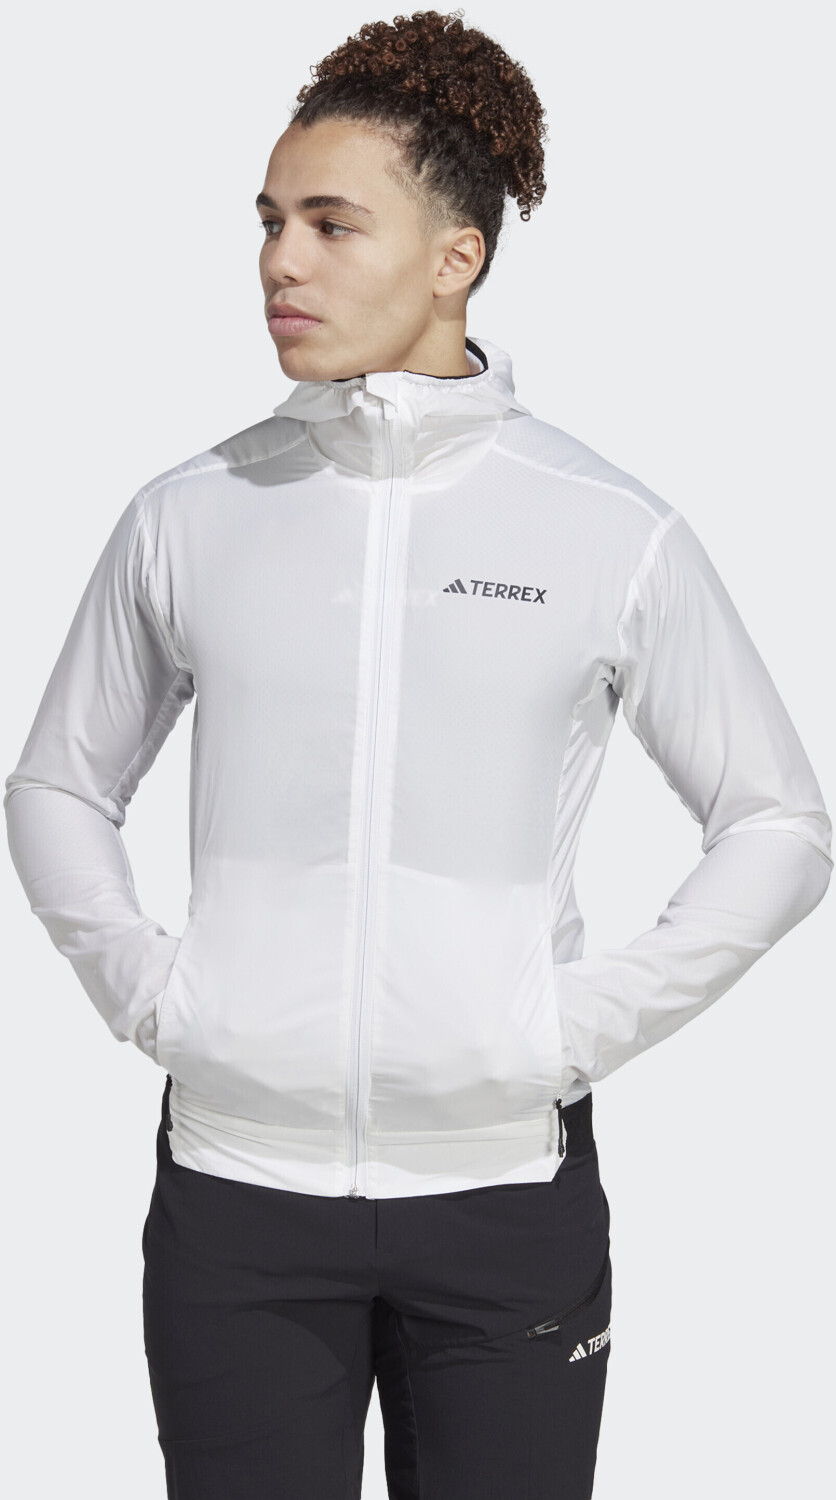 Top Qualität Buy Adidas Man TERREX Windweave Deals Best – £42.50 (Today) Xperior from on Wind Jacket